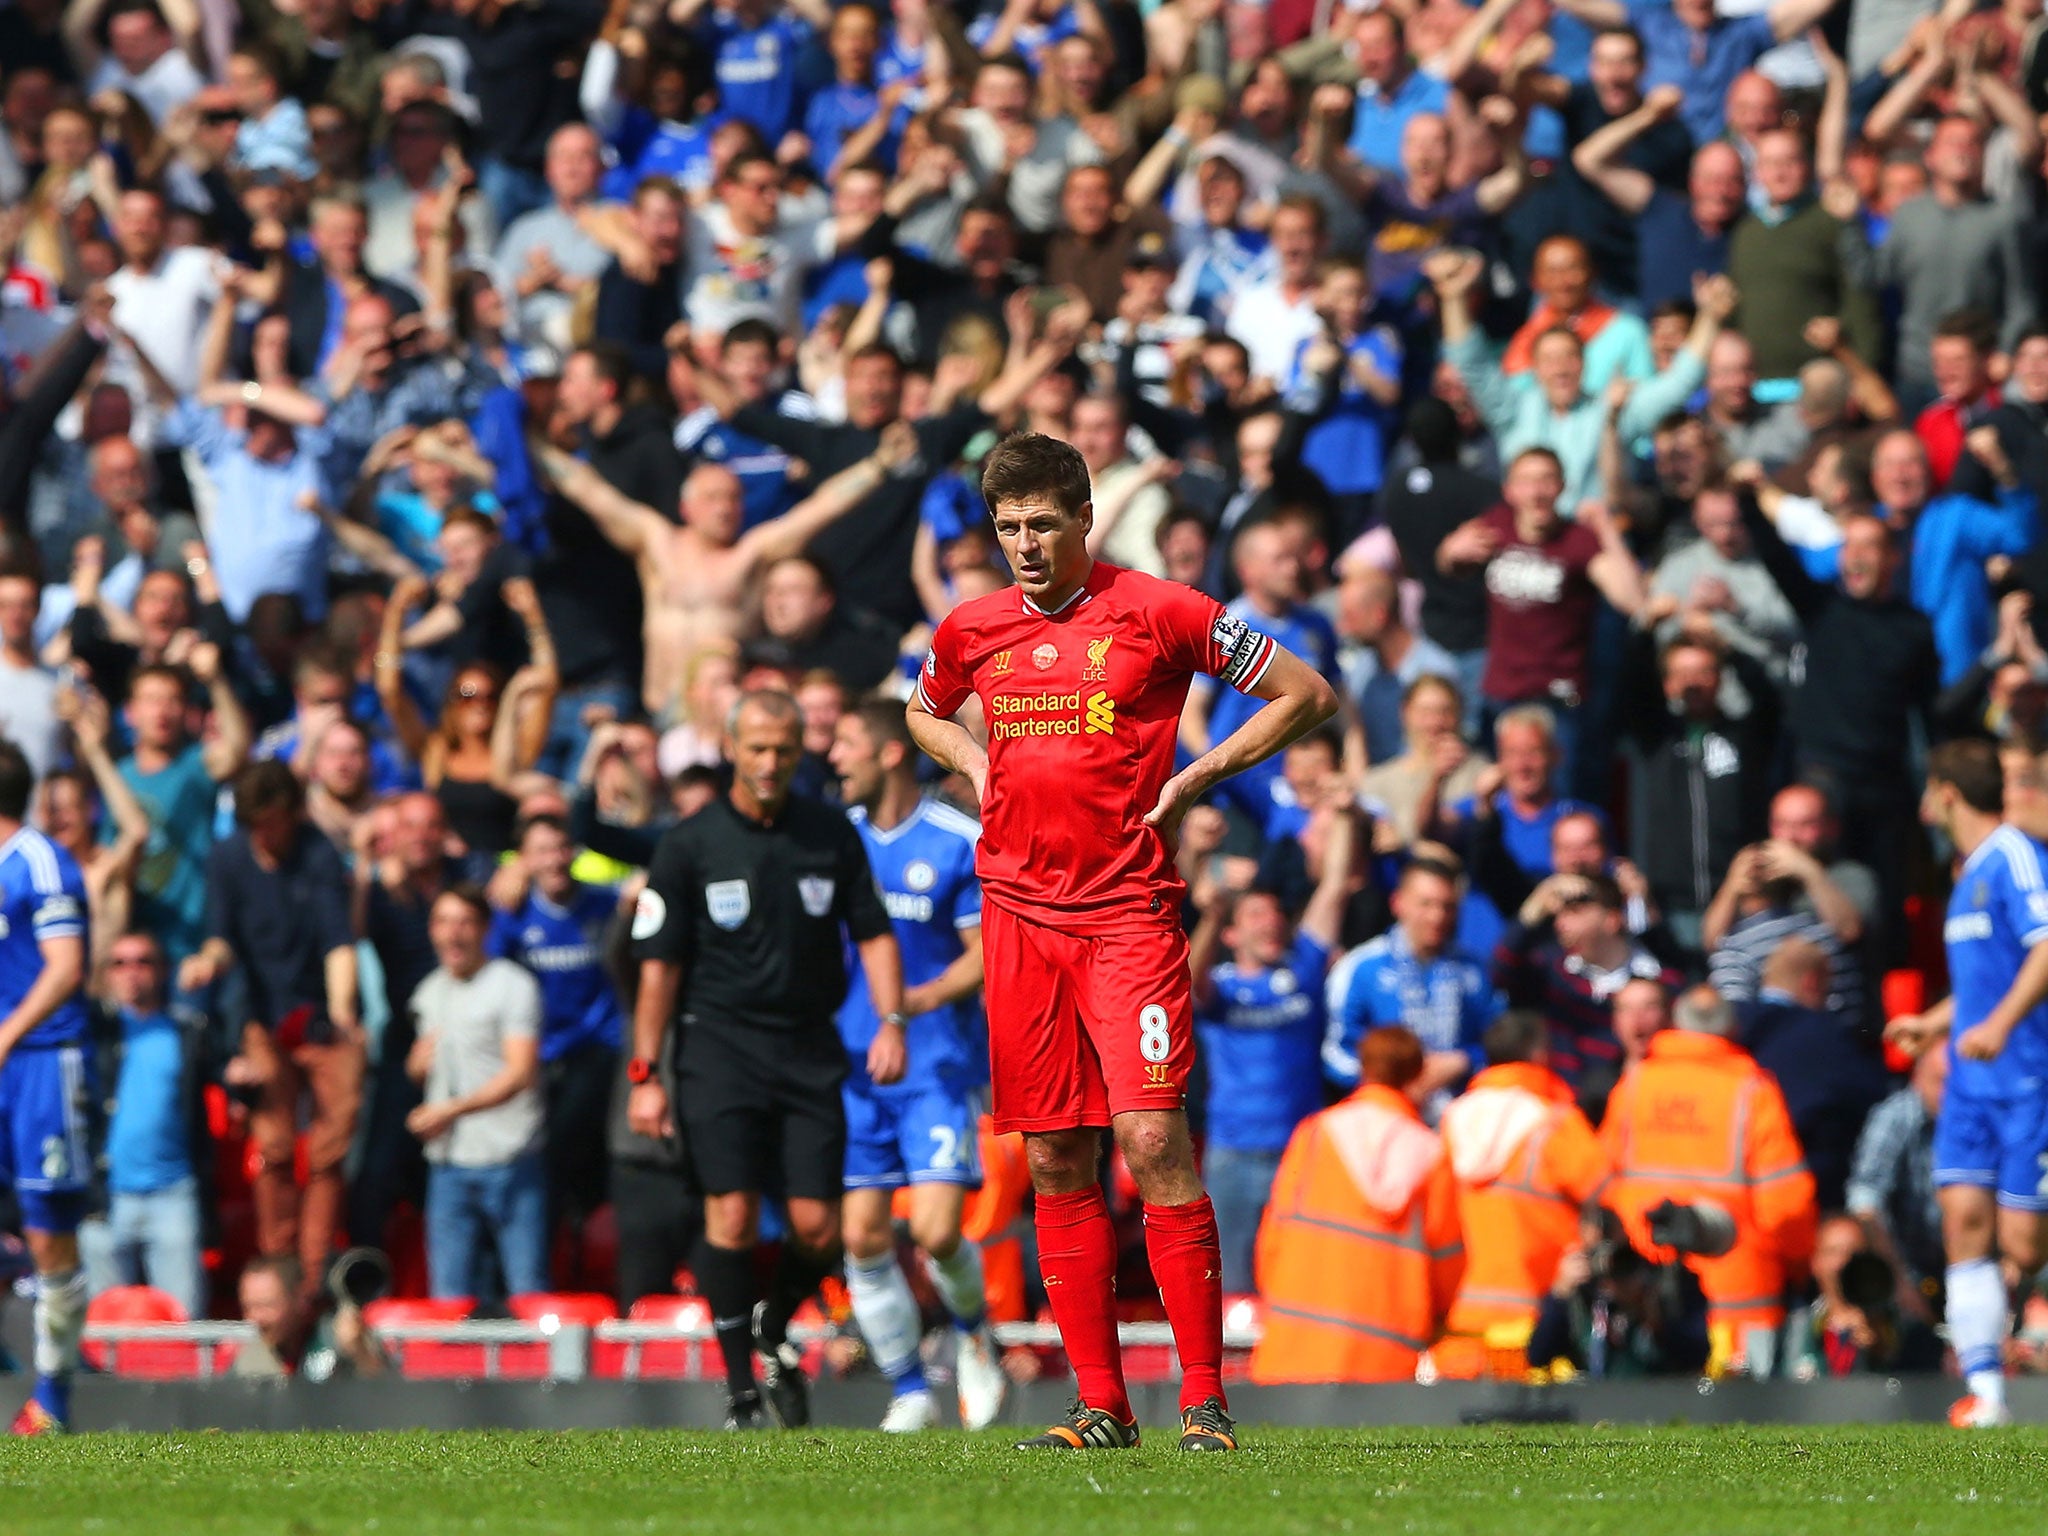 Steven Gerrard looks dejected after the match between Liverpool and Chelsea last season